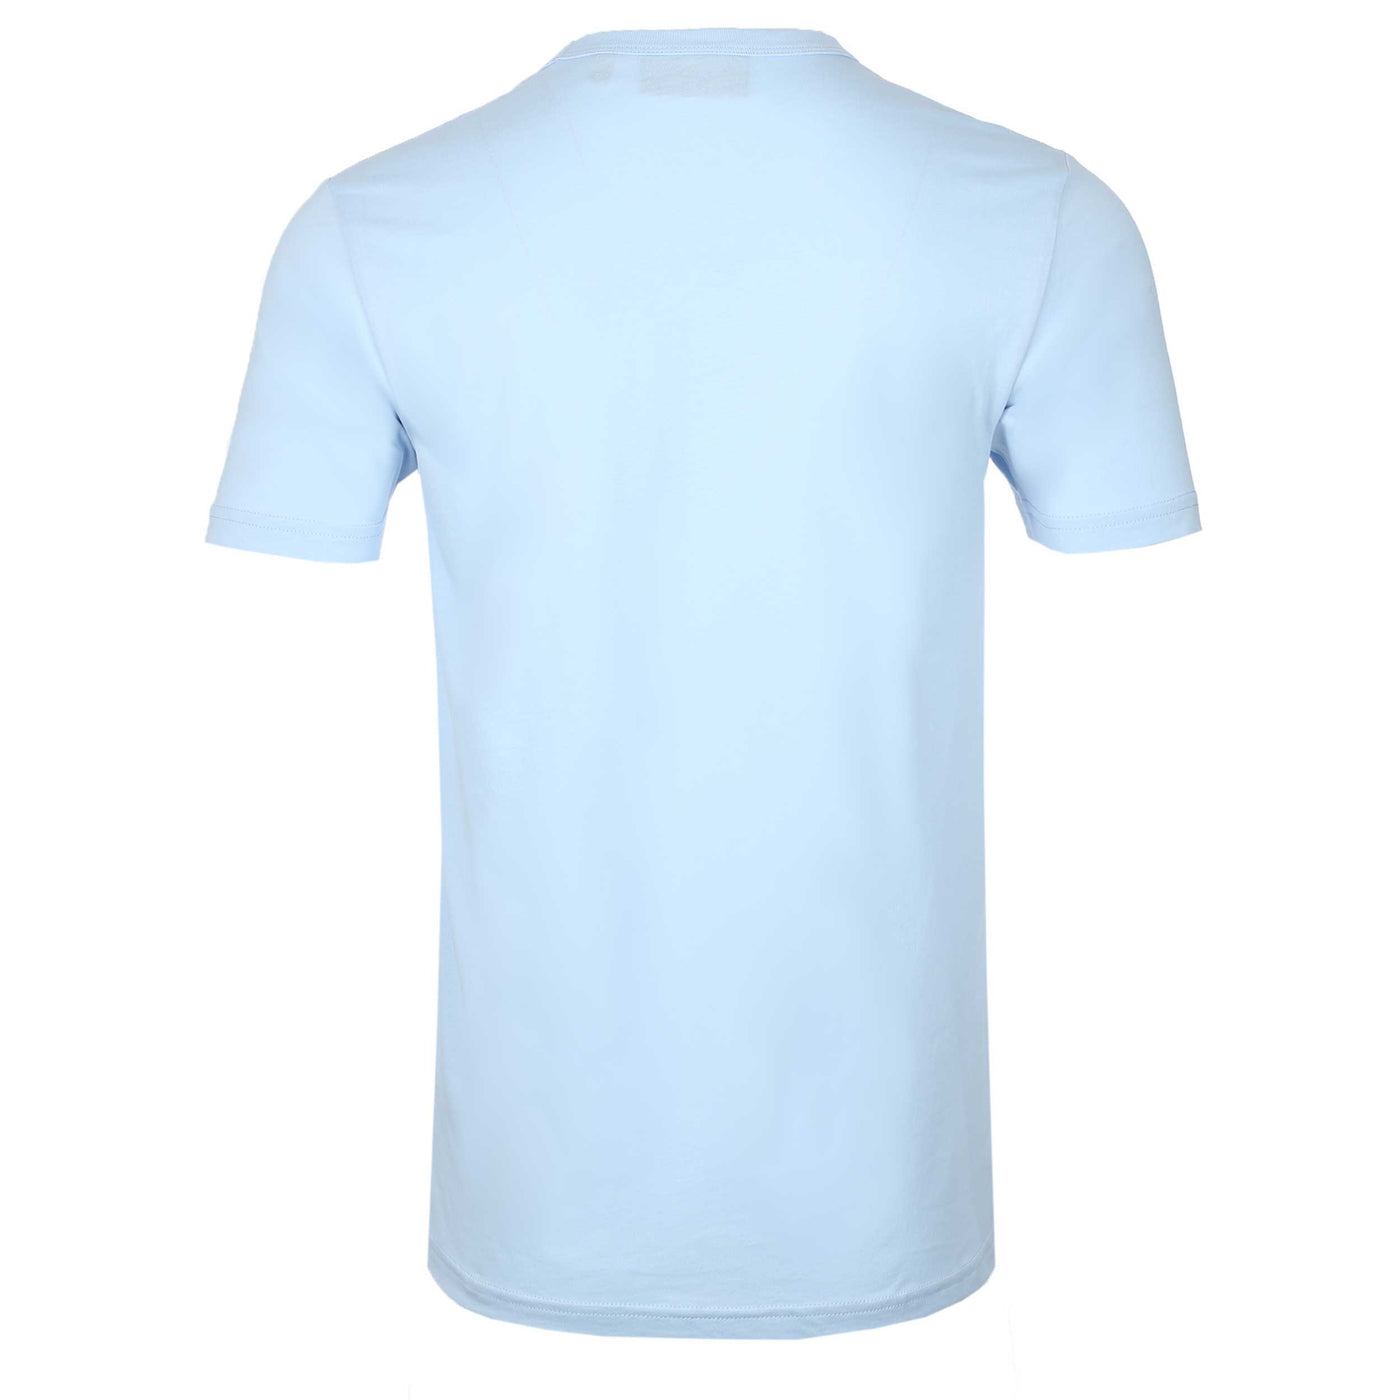 Belstaff Signature T Shirt in Sky Blue Back